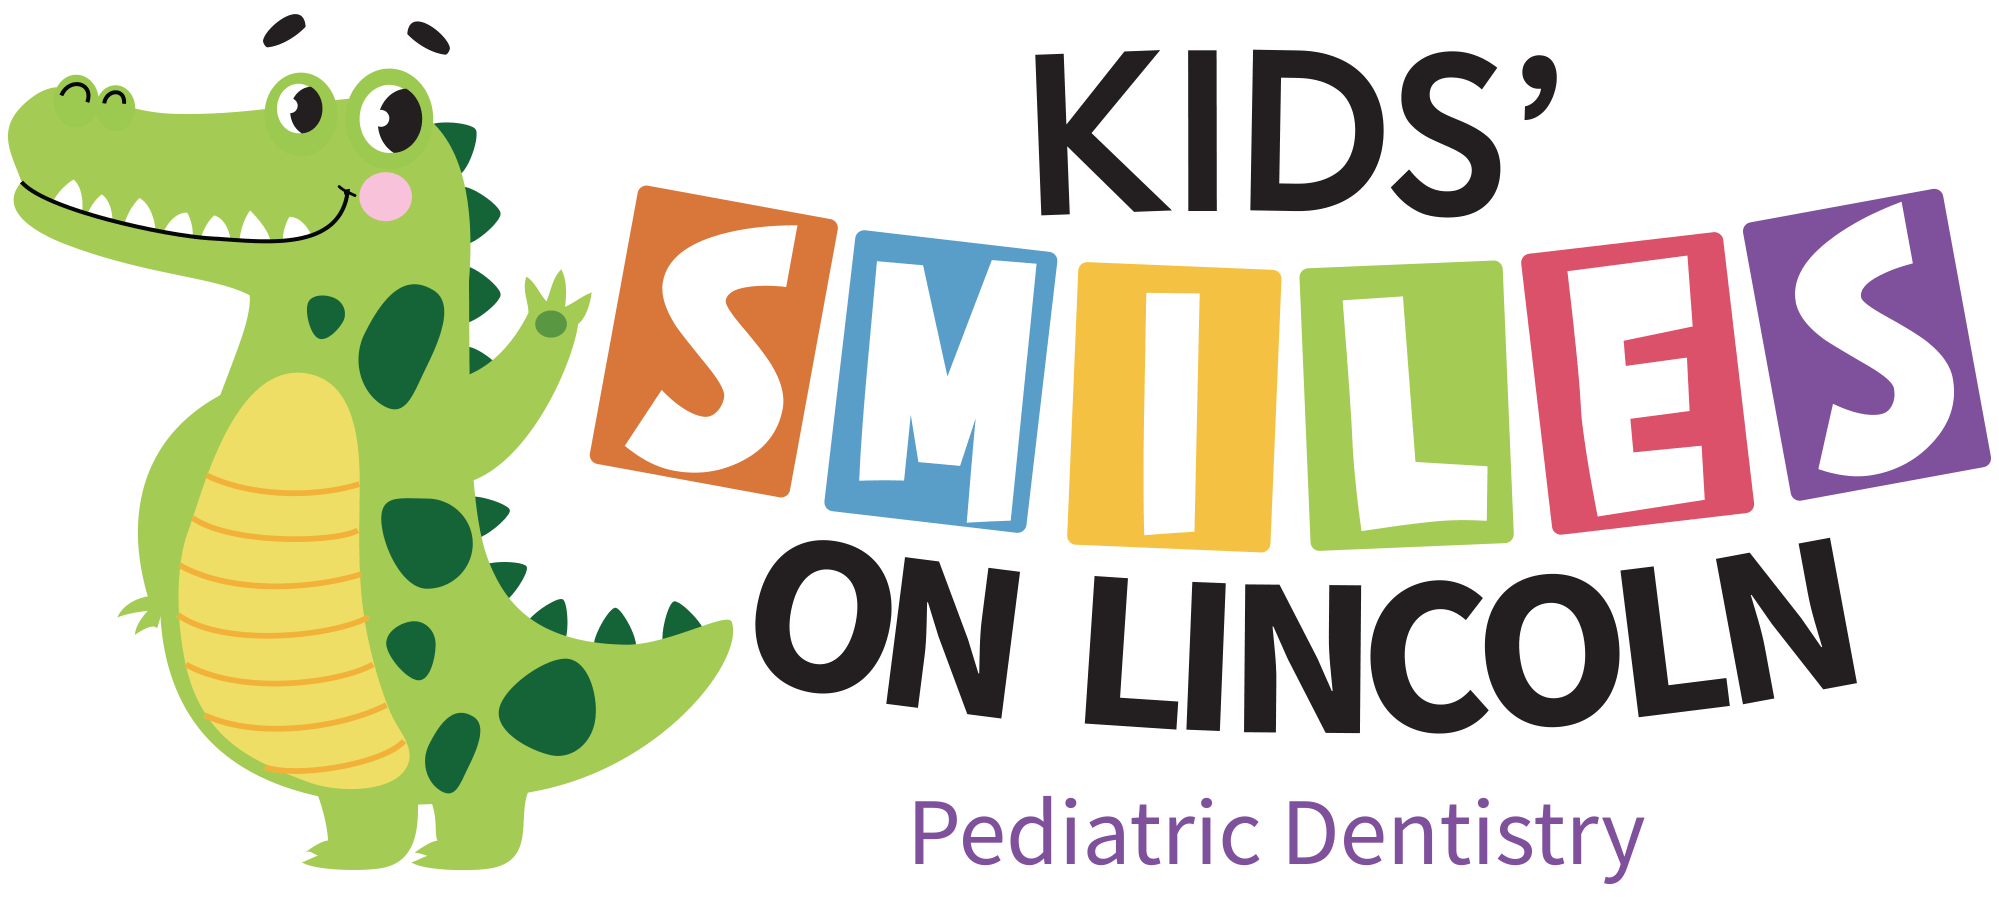 Kids' Smiles on Lincoln logo